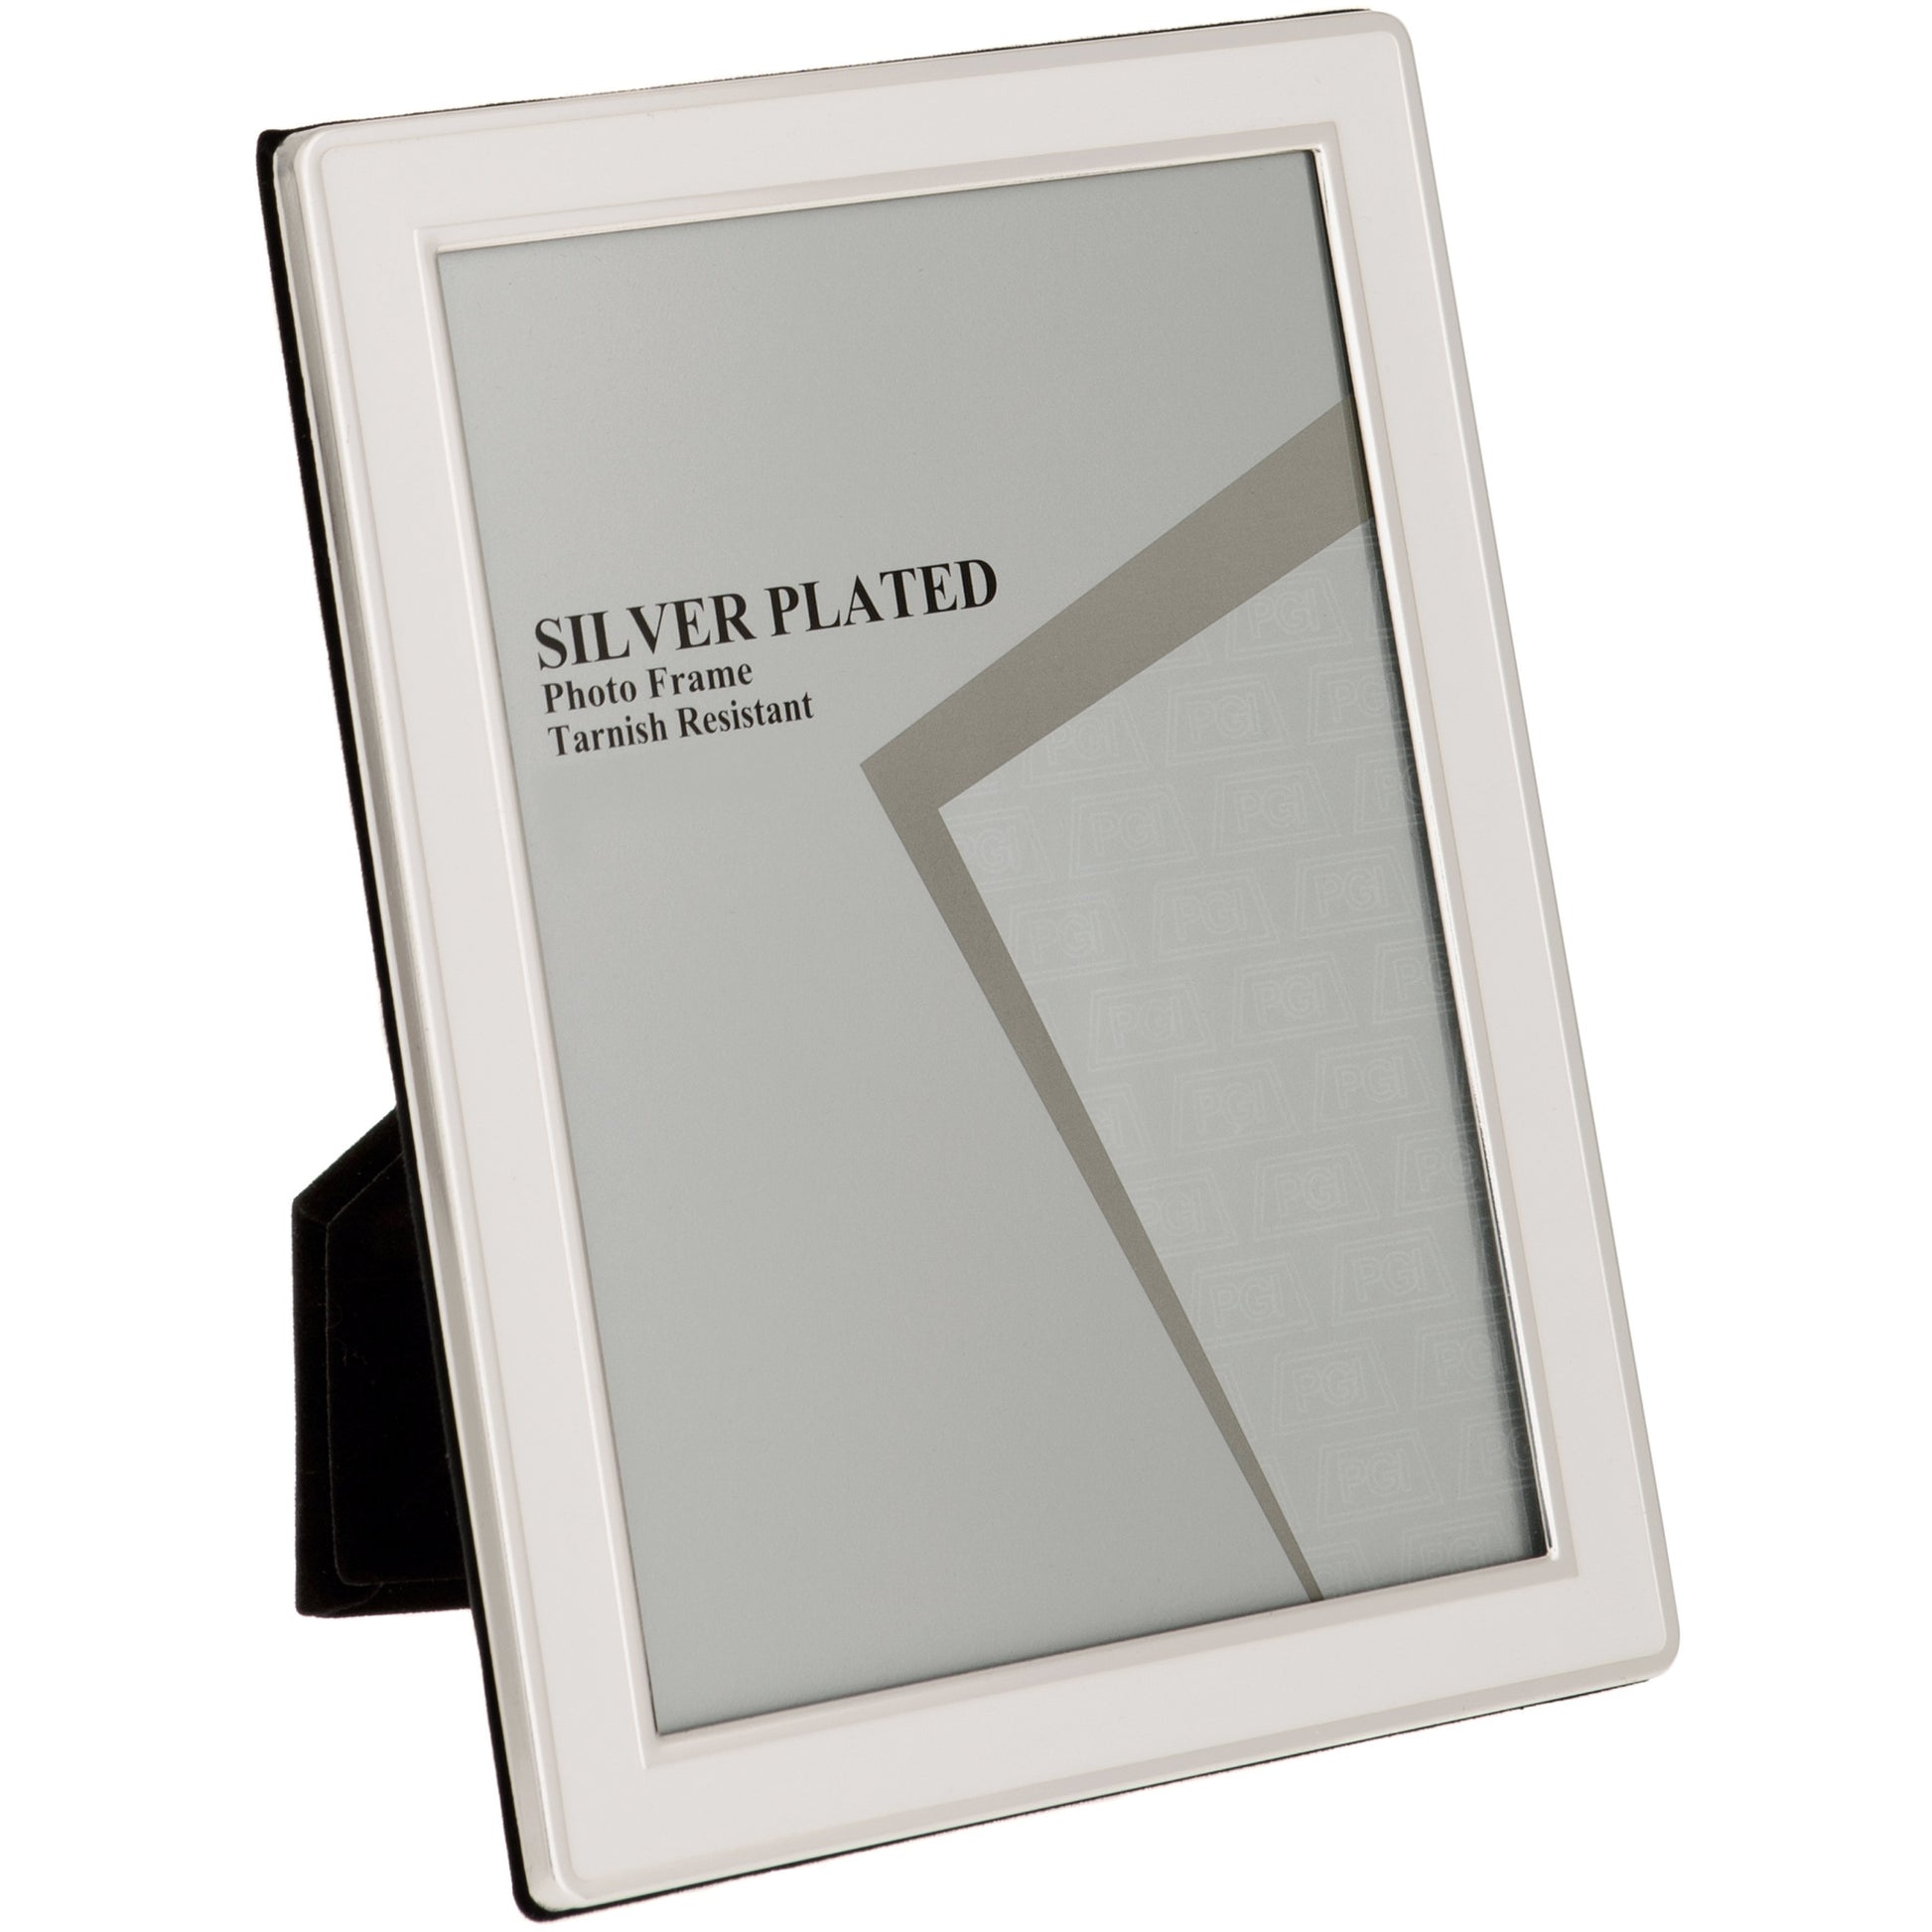 Silver Plated Cream Enamel Photo Frame 5 x 7 -inch